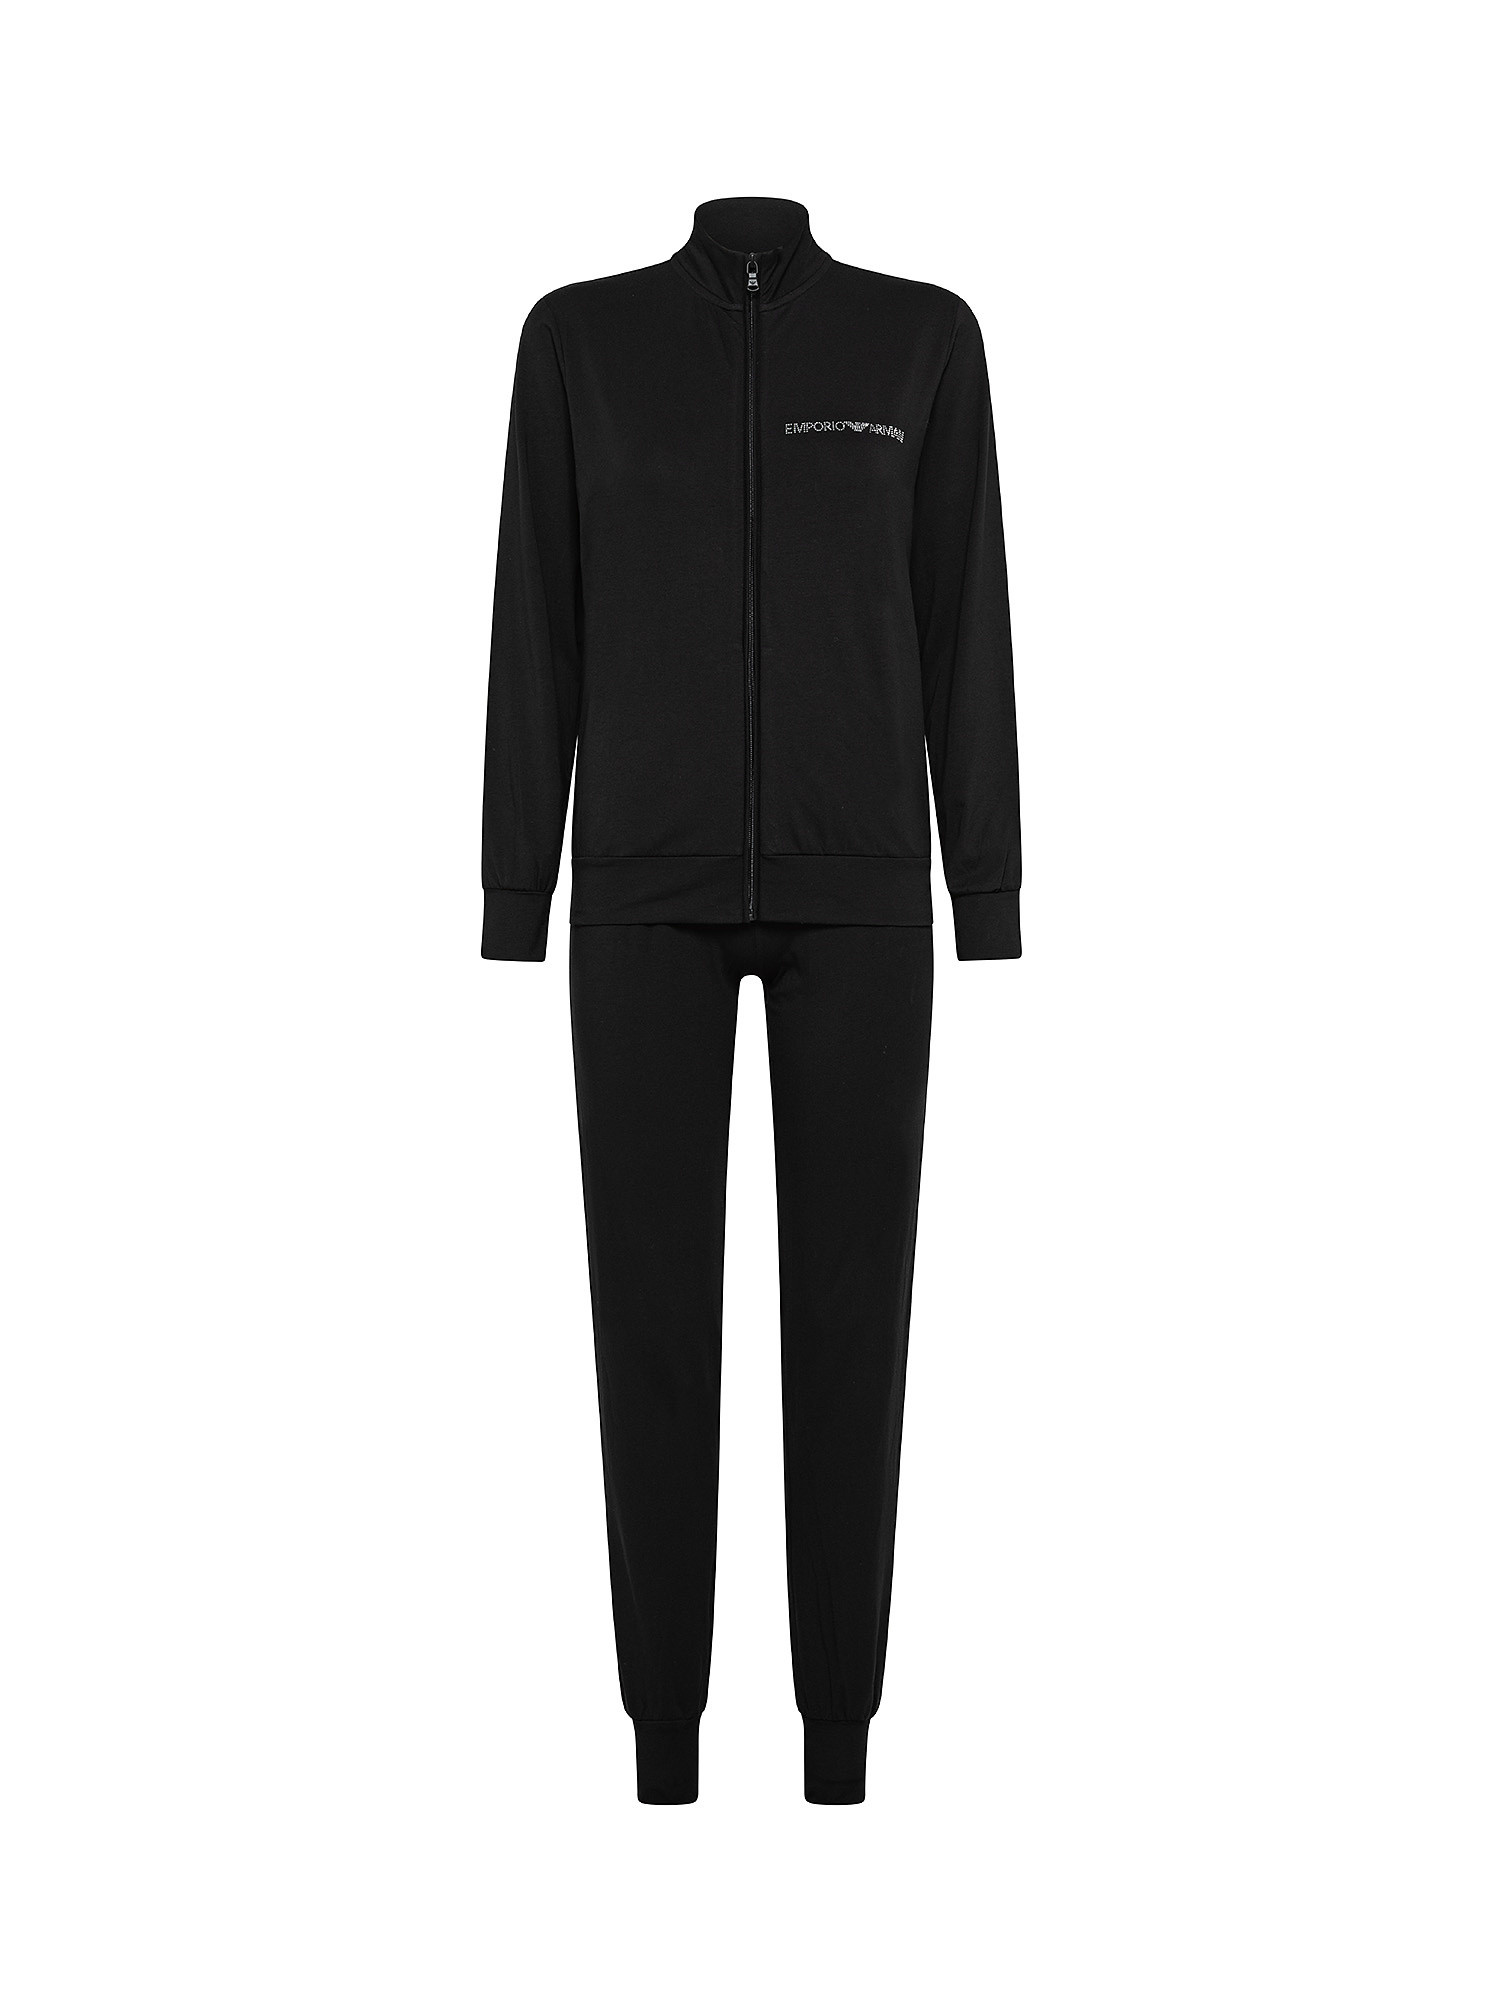 Loungewear set with full-zip sweatshirt, Black, large image number 0